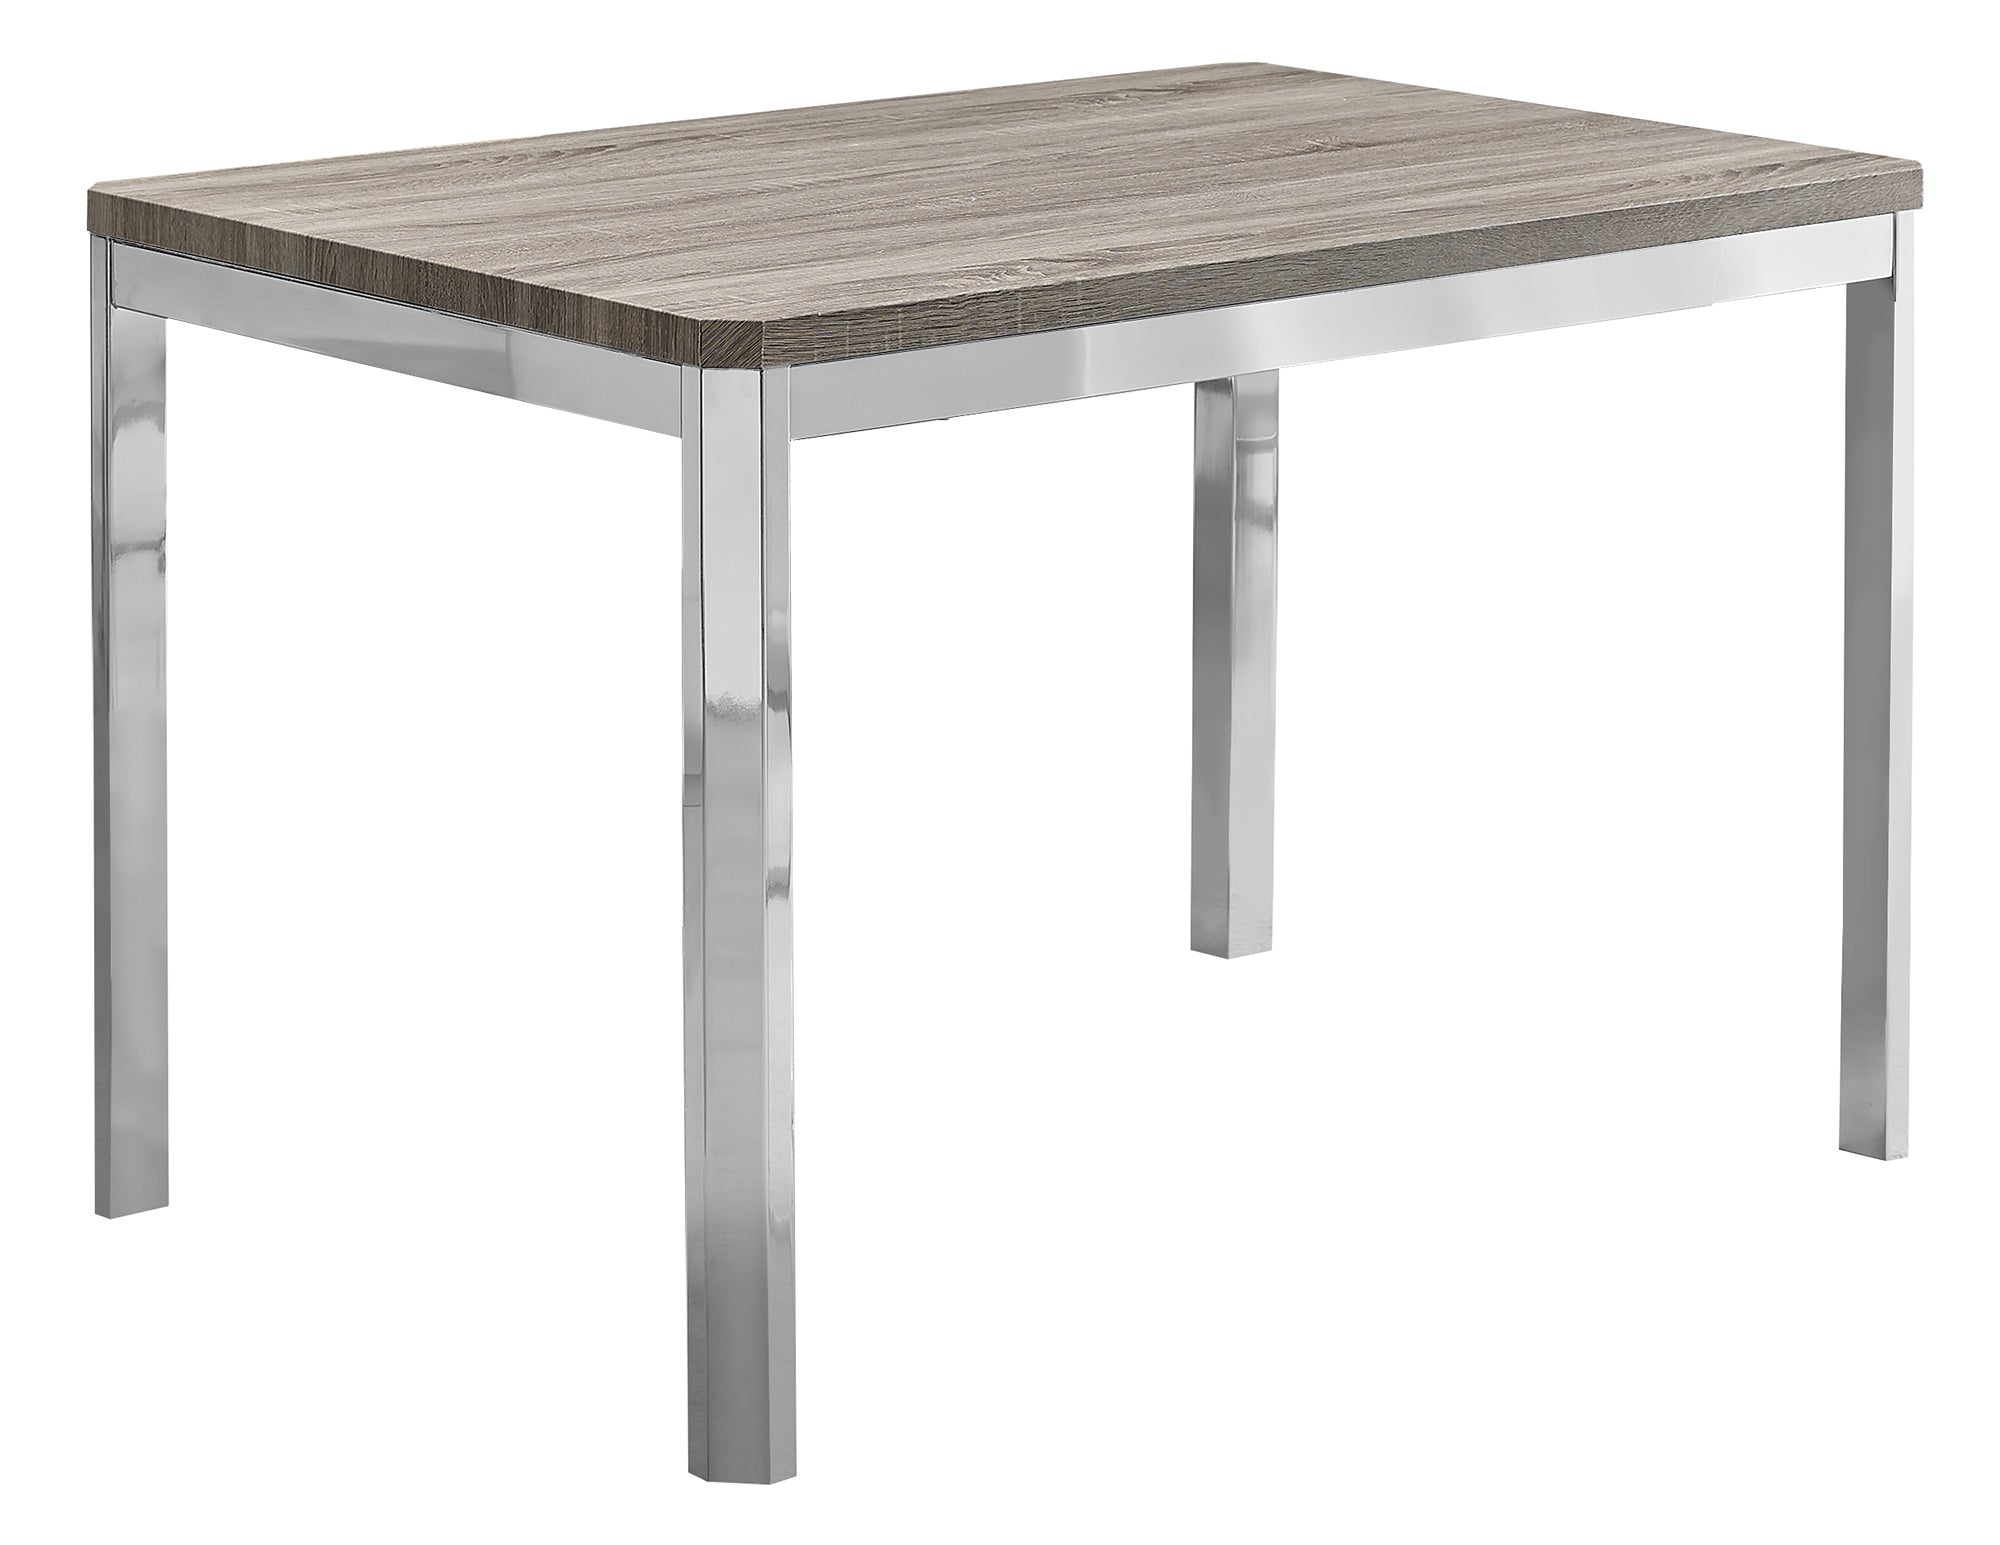 MN-231042    Dining Table, 48" Rectangular, Metal, Kitchen, Dining Room, Metal Legs, Laminate, Dark Taupe, Chrome, Contemporary, Modern